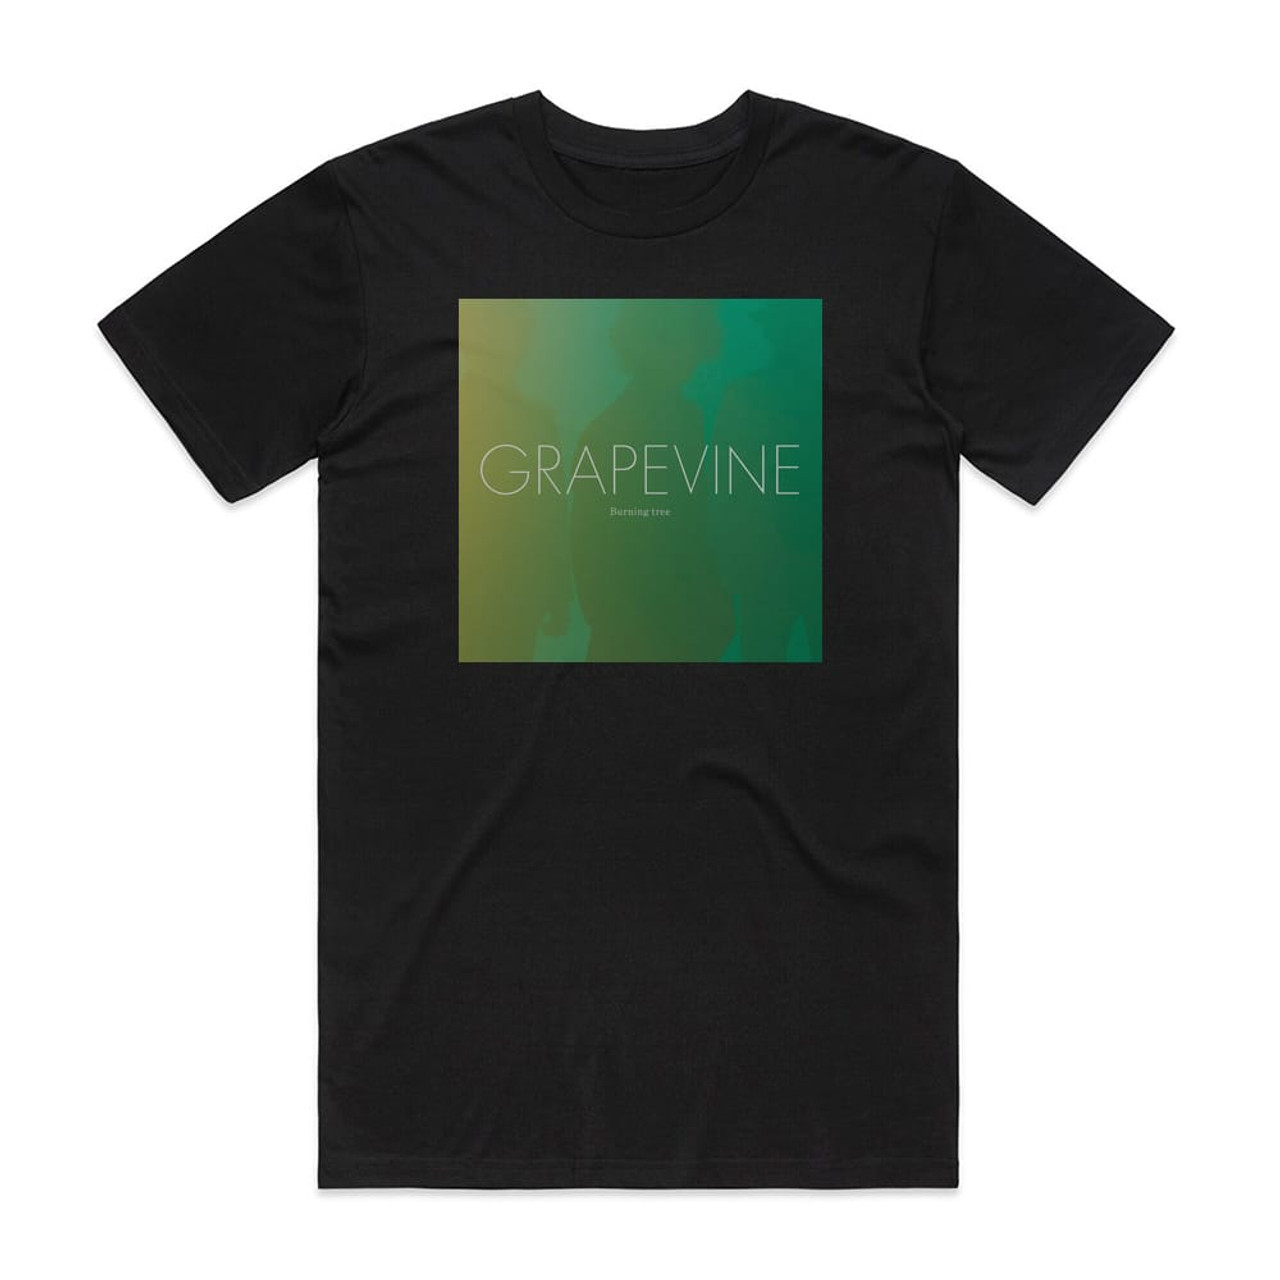 GRAPEVINE Burning Tree Album Cover T-Shirt Black